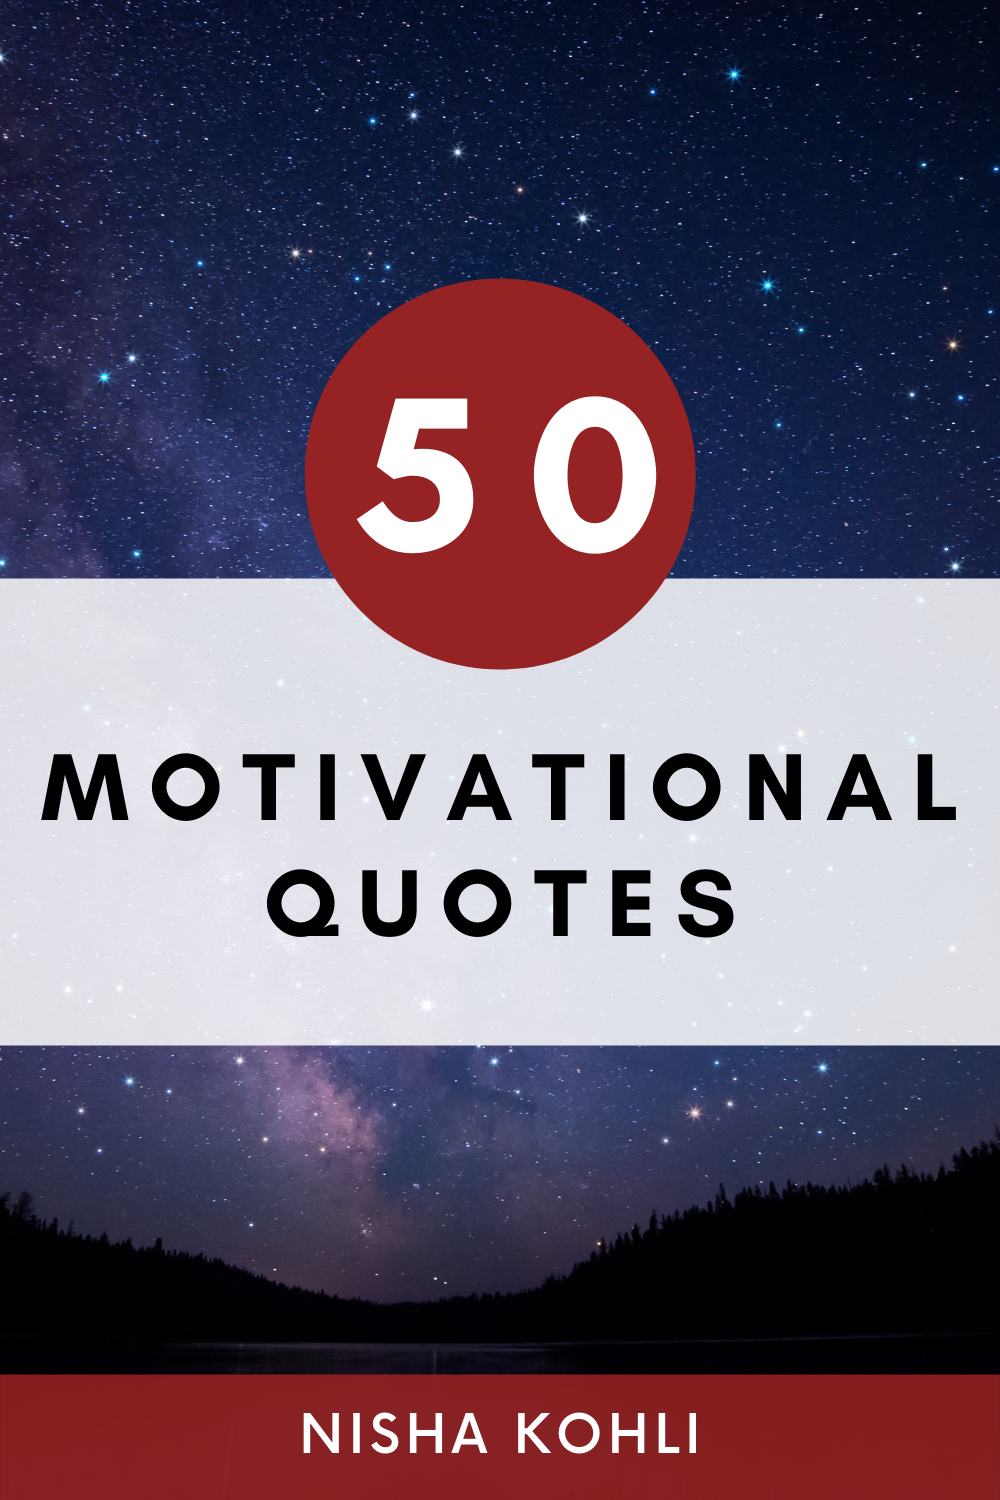 50 Motivational Quotes from 5 Successful people - NISHA KOHLI